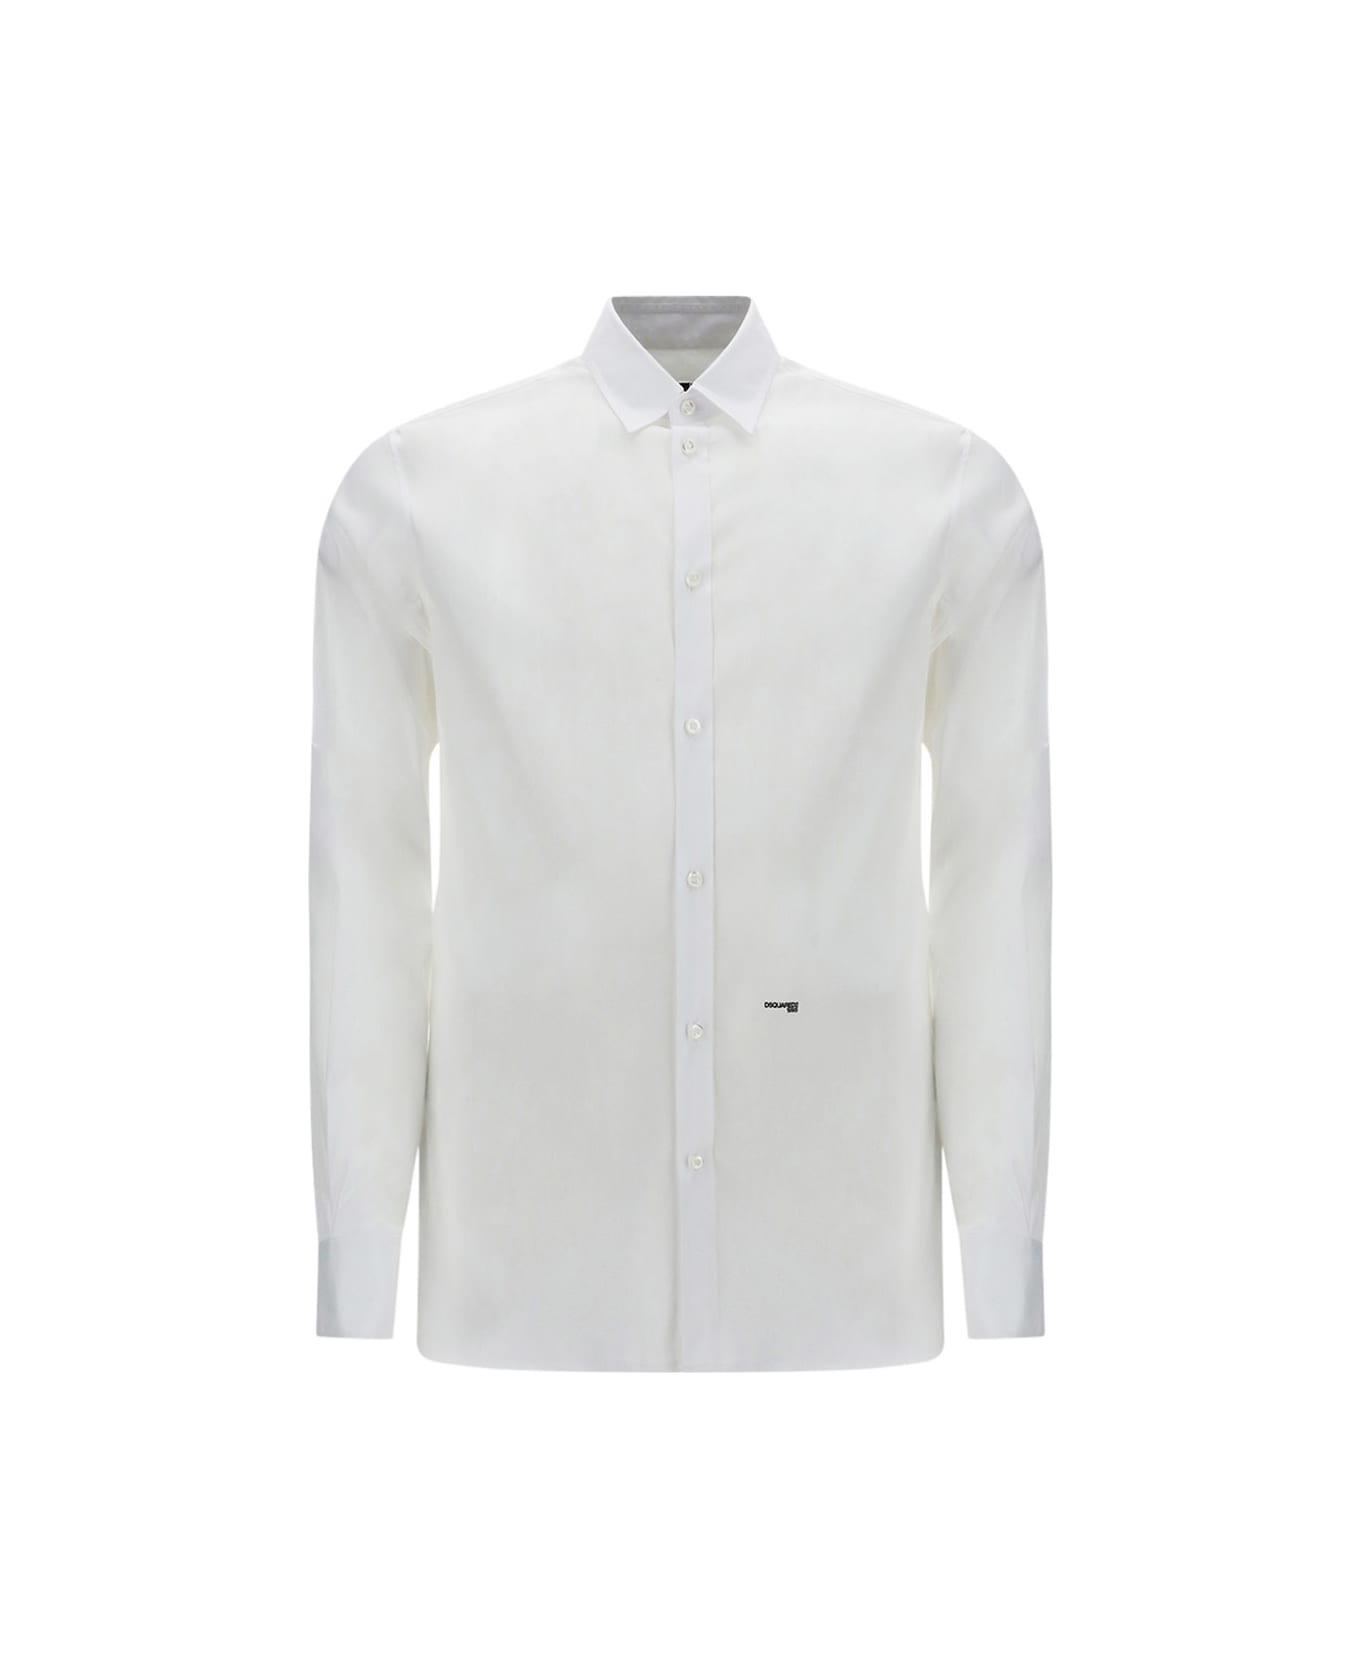 Dsquared2 White Cotton Blend Shirt - 100